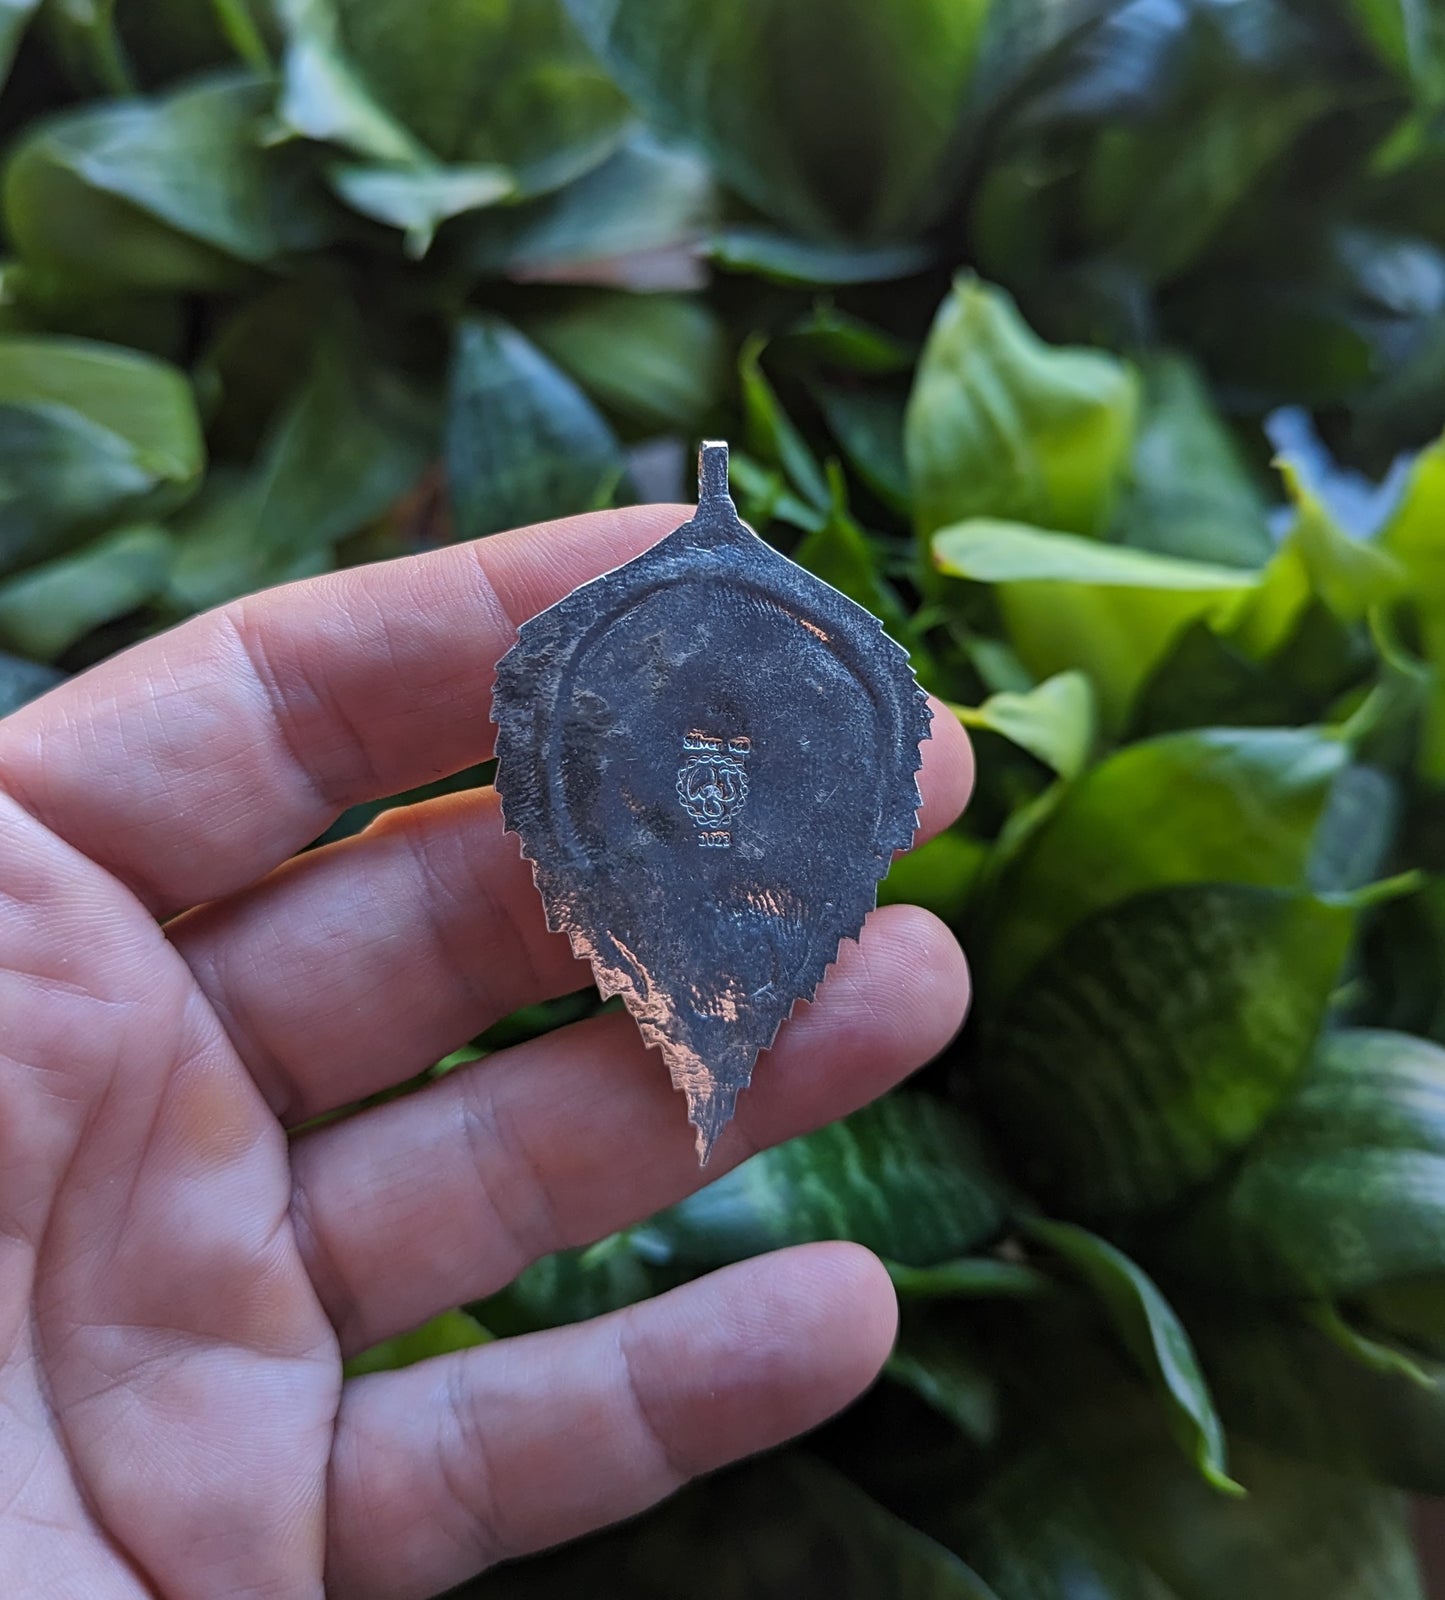 Handmade Birch Leaf pendant with Beautiful Image Featuring the Moon and te Carina Nebula